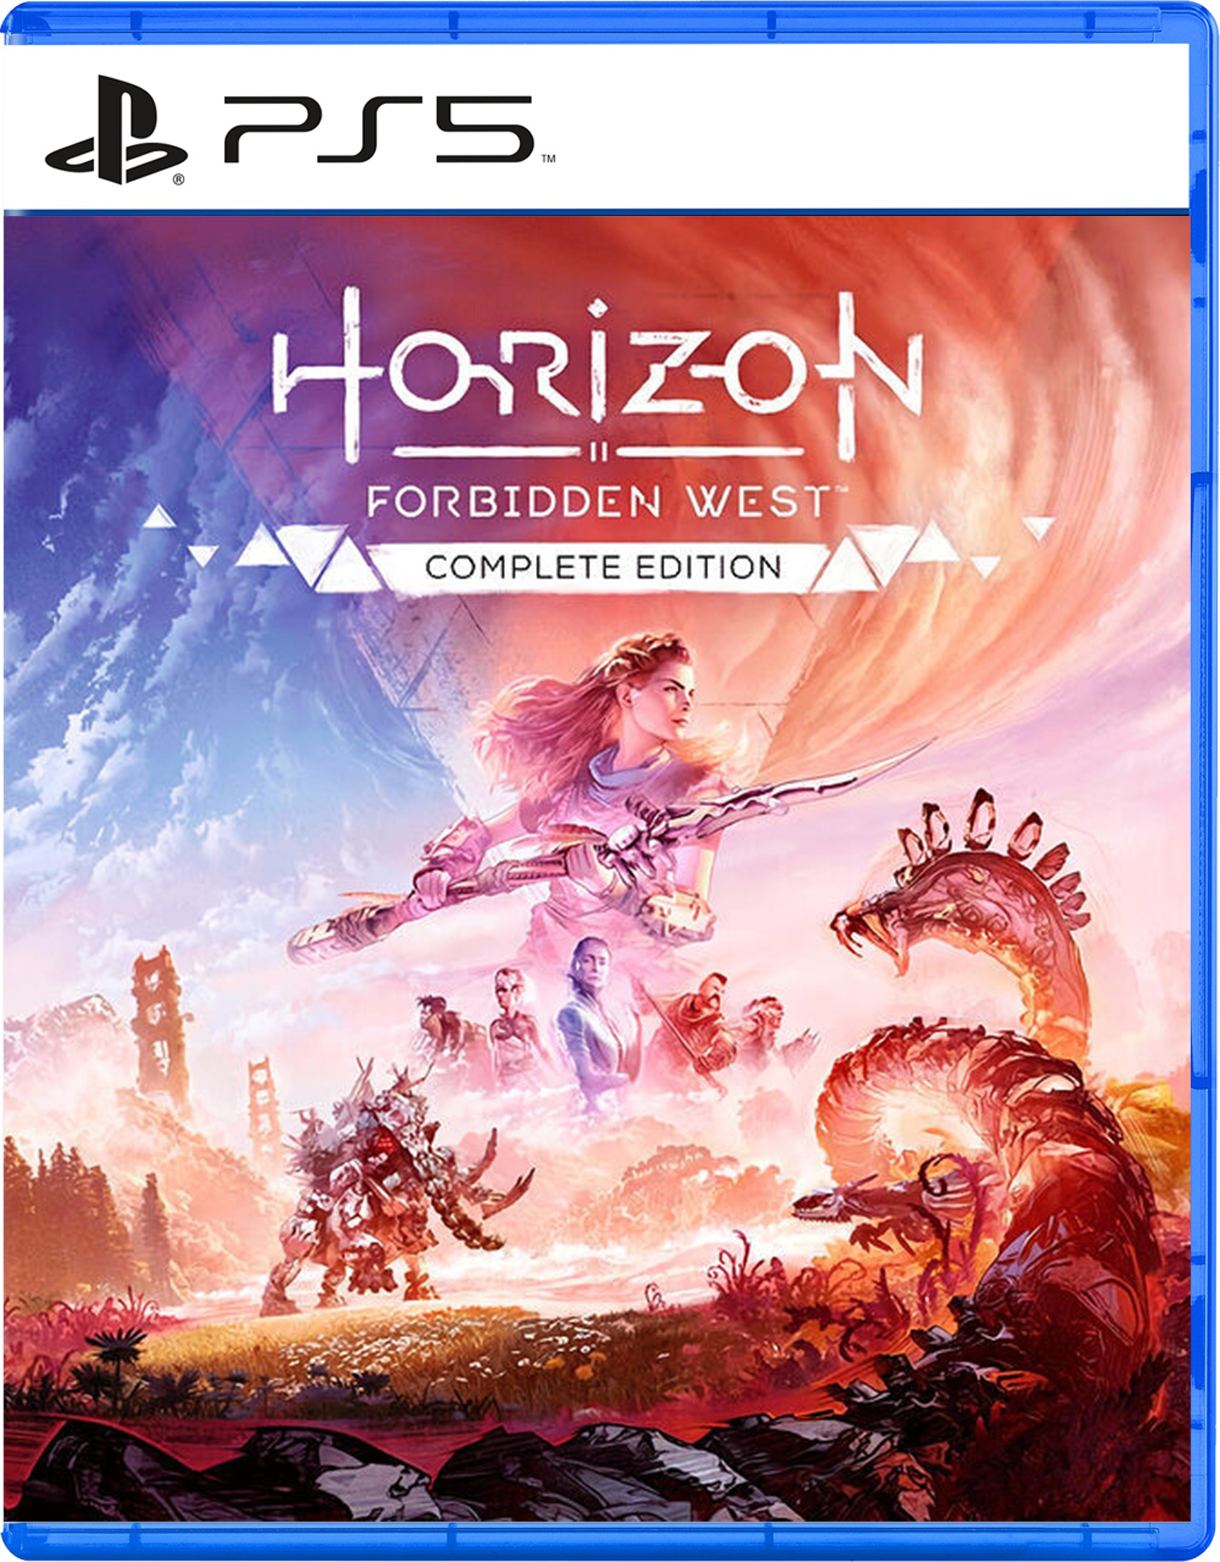 Horizon Forbidden West Complete Edition - Announcement Trailer